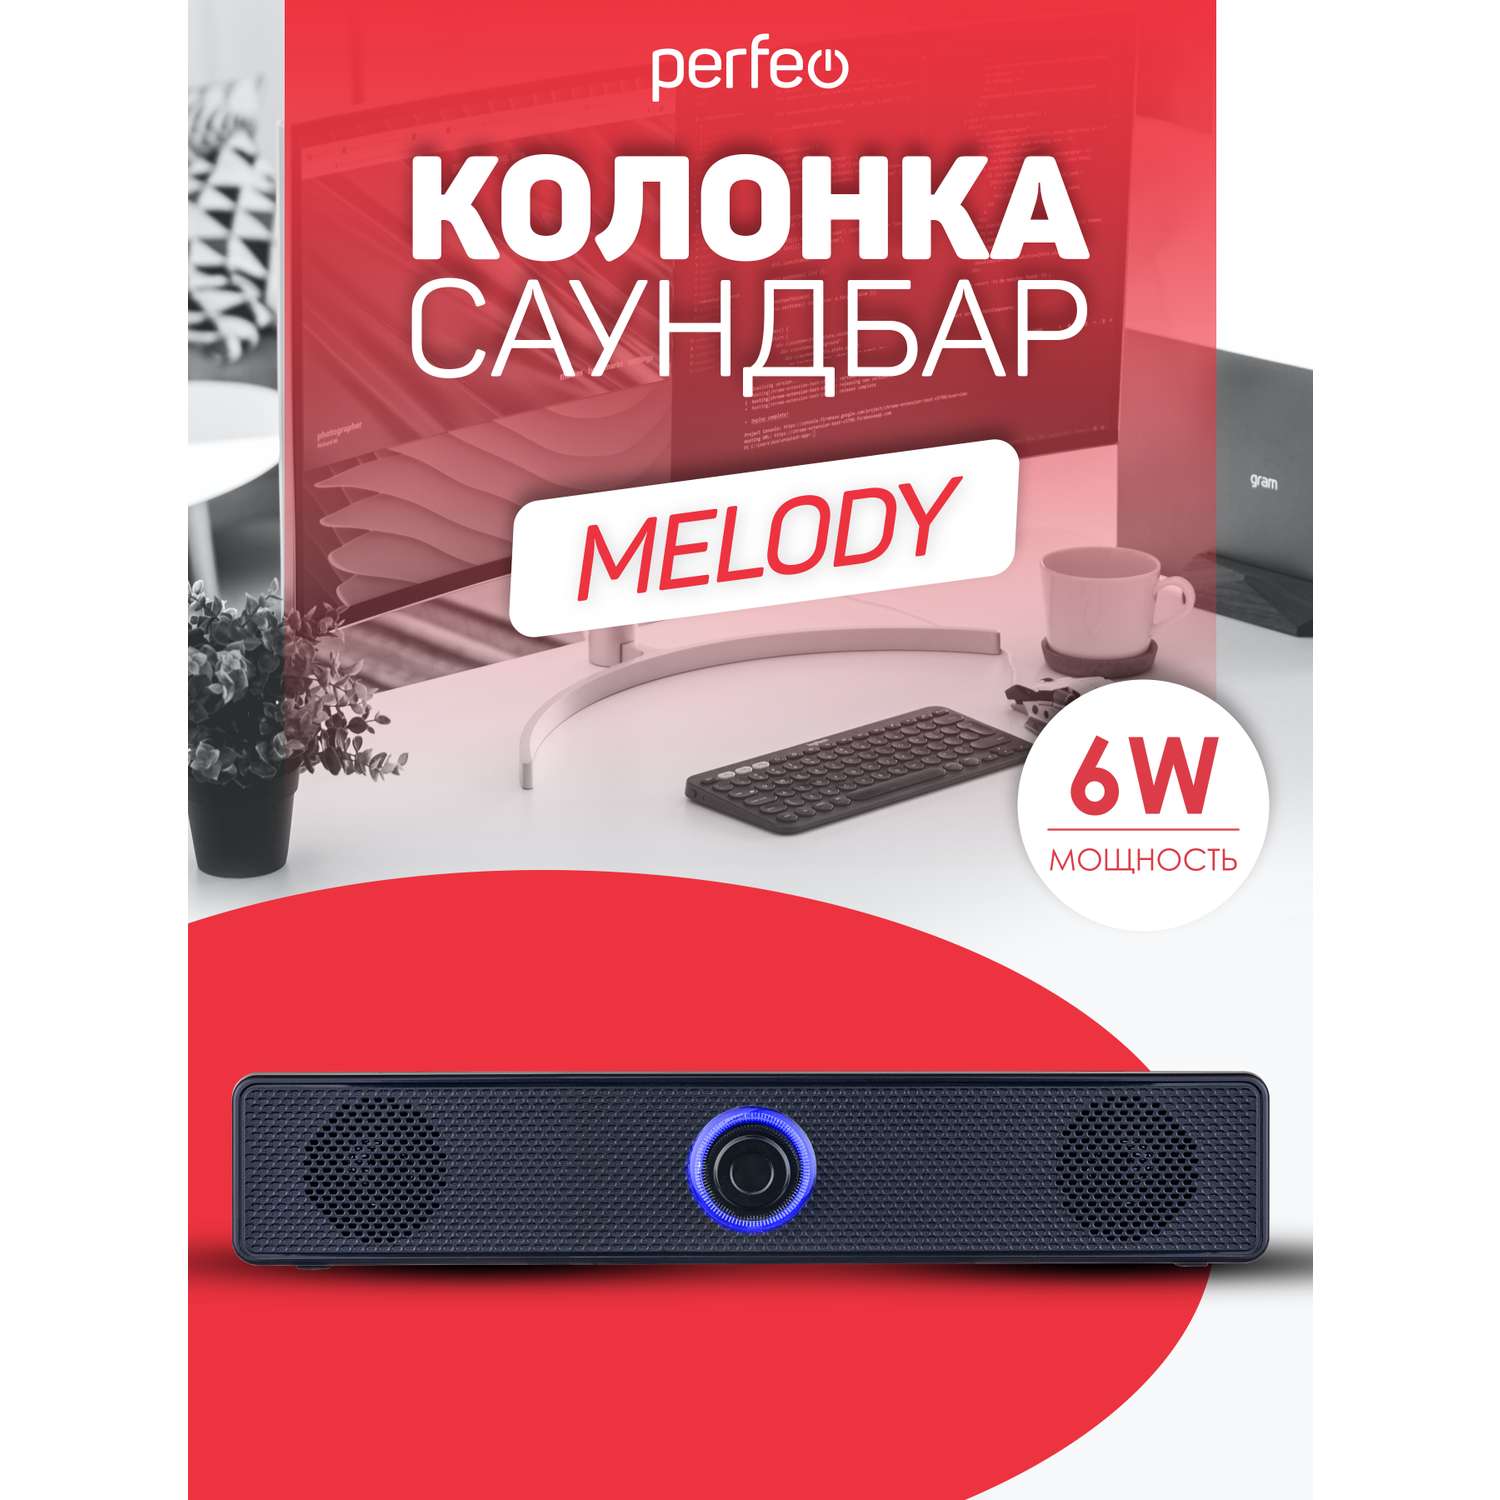 Колонка-саундбар Perfeo компьютерная MELODY мощность 6 Вт USB пластик черный - фото 1